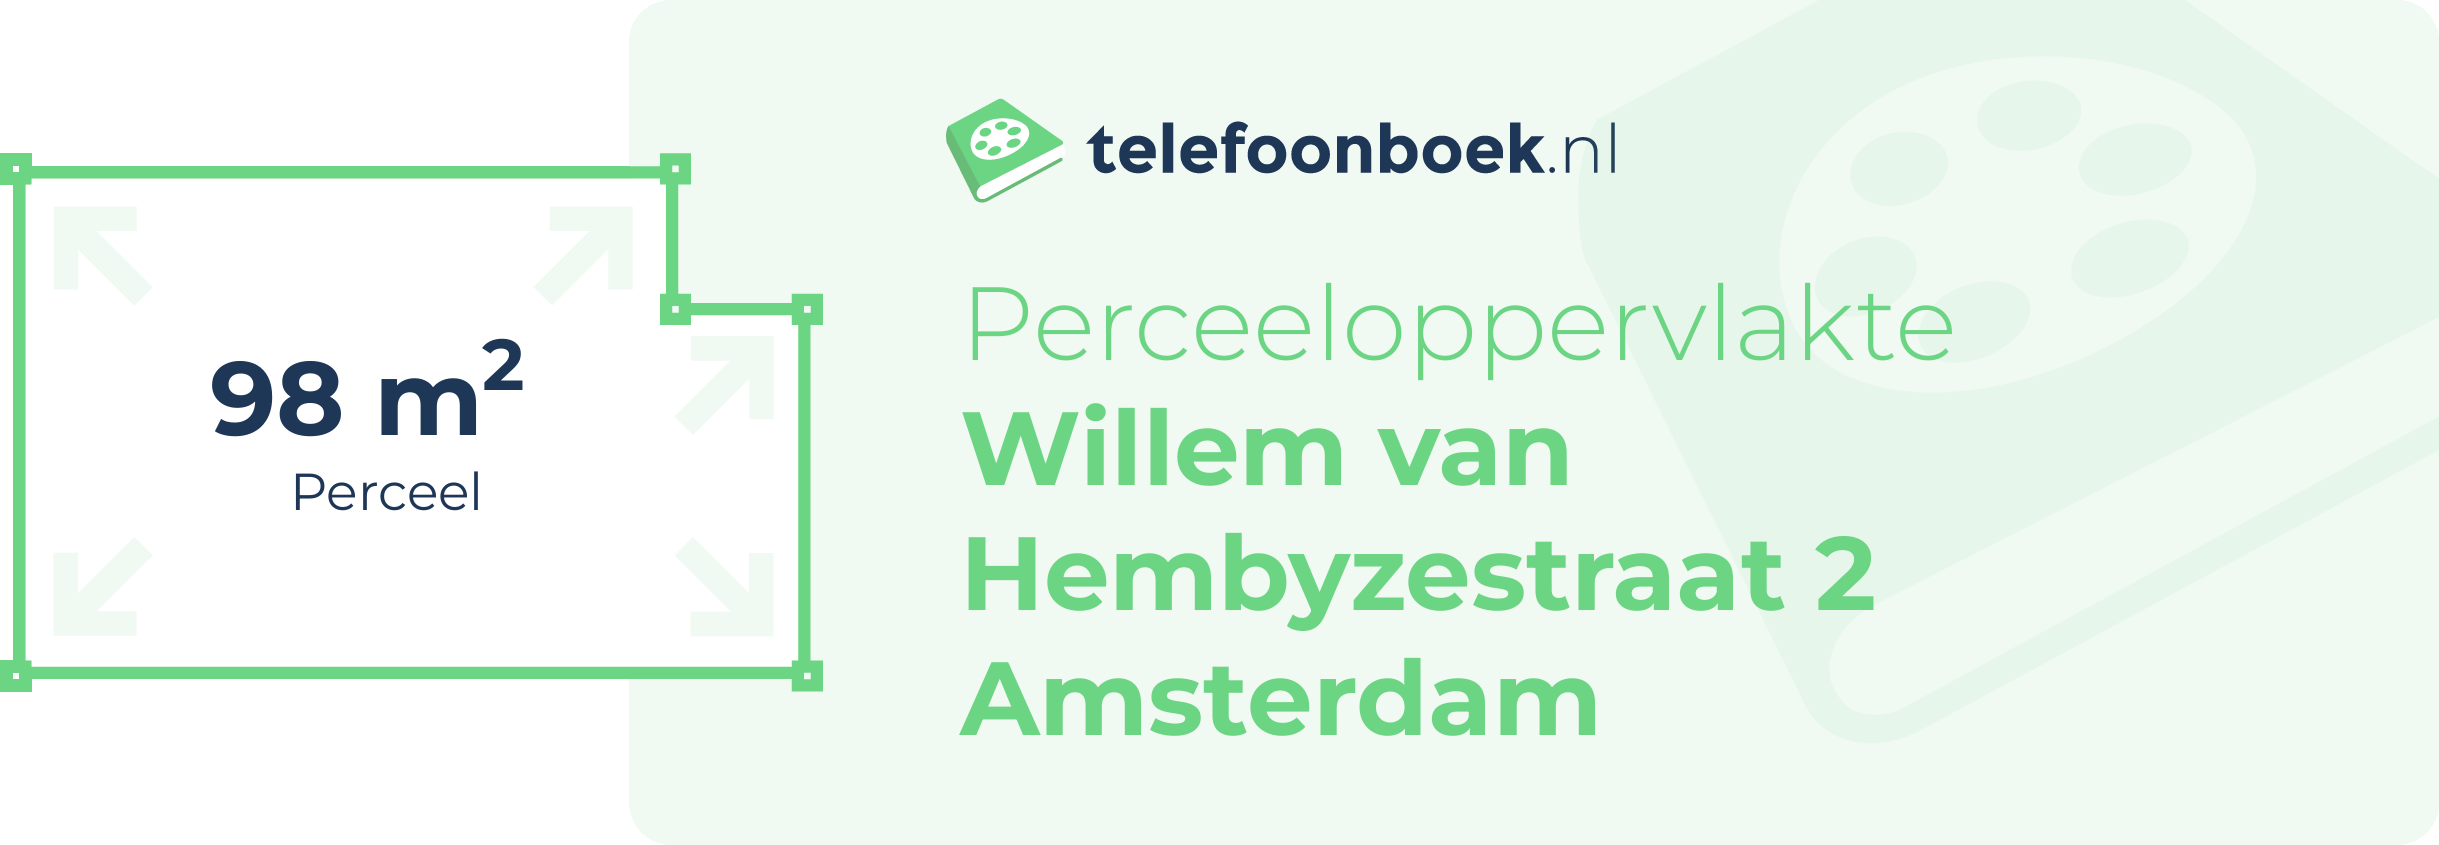 Perceeloppervlakte Willem Van Hembyzestraat 2 Amsterdam